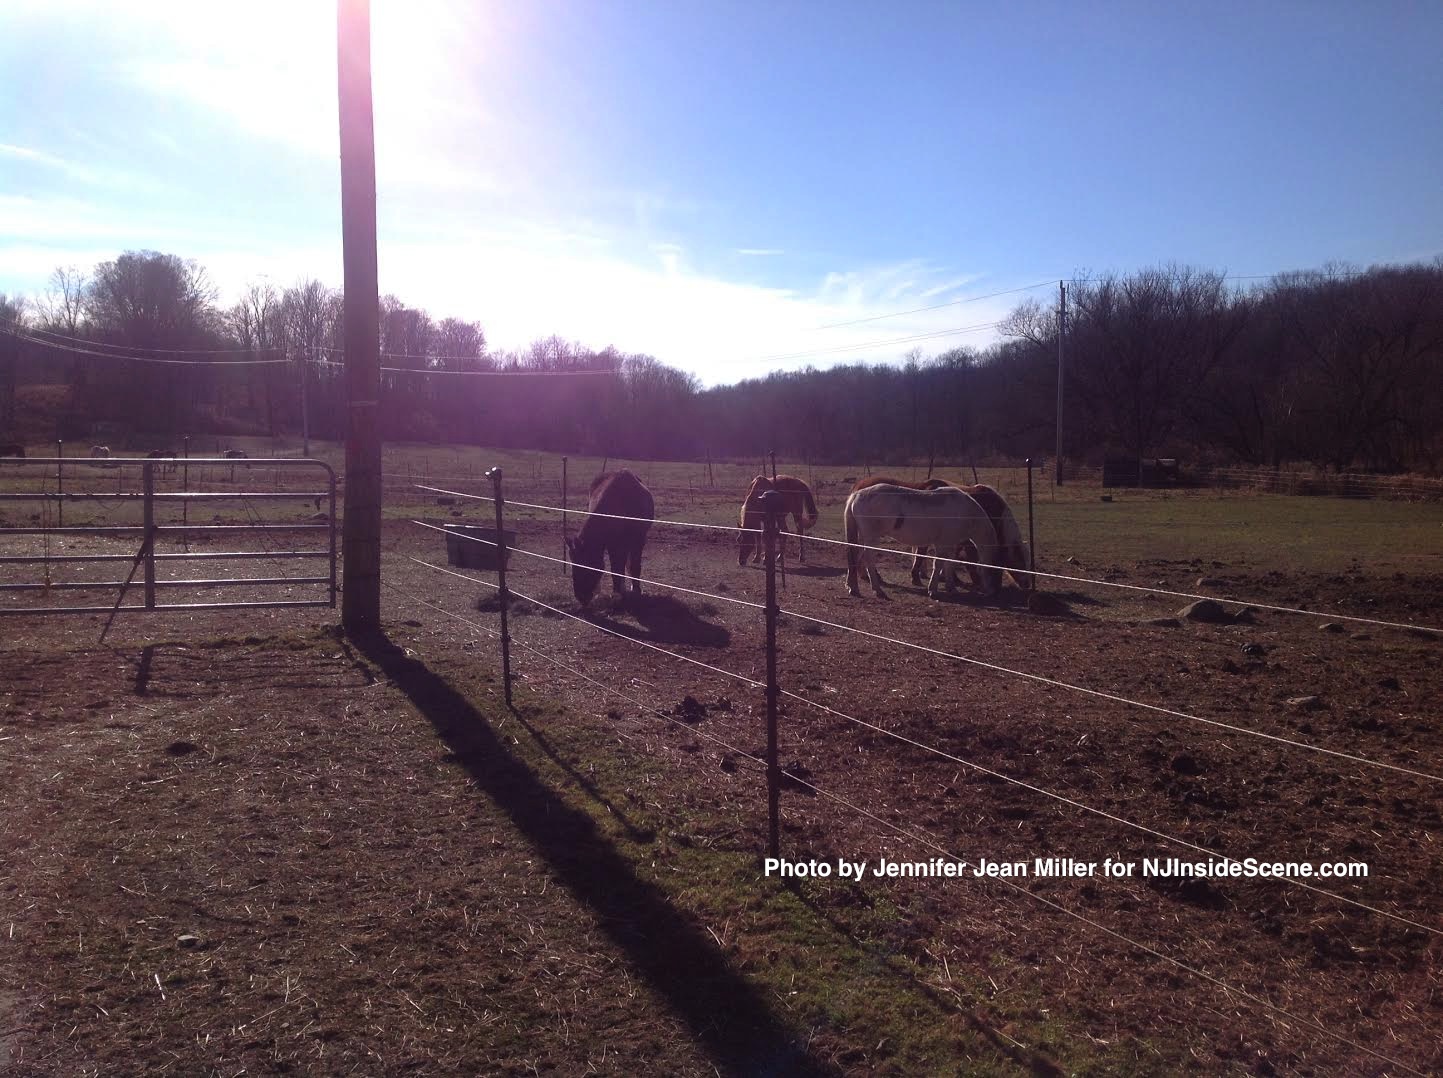 Horses in the idyllic rescue pastures.